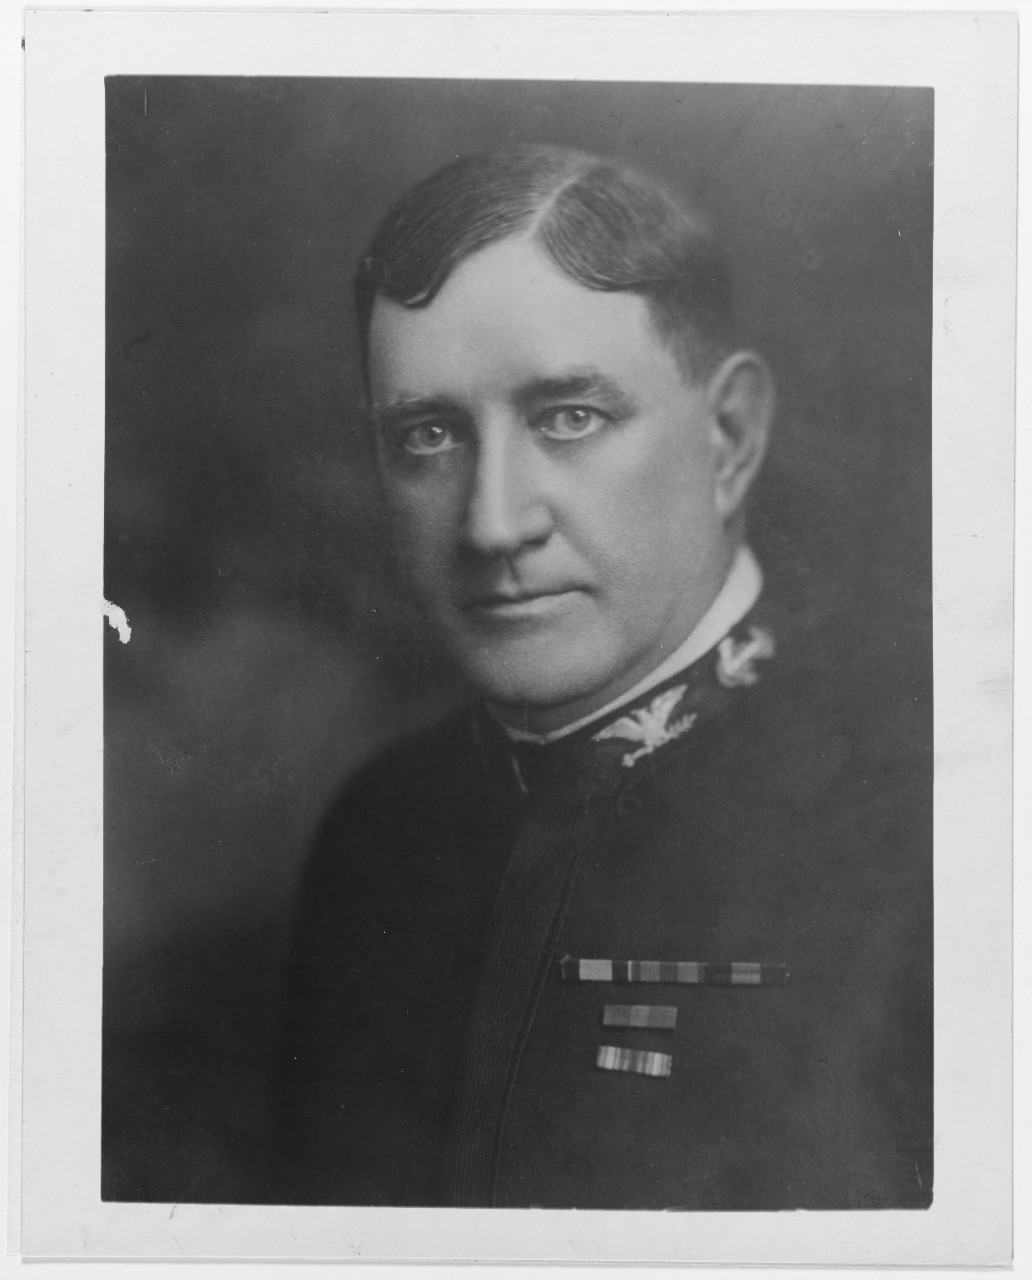 Captain Robert L. Russell, USN